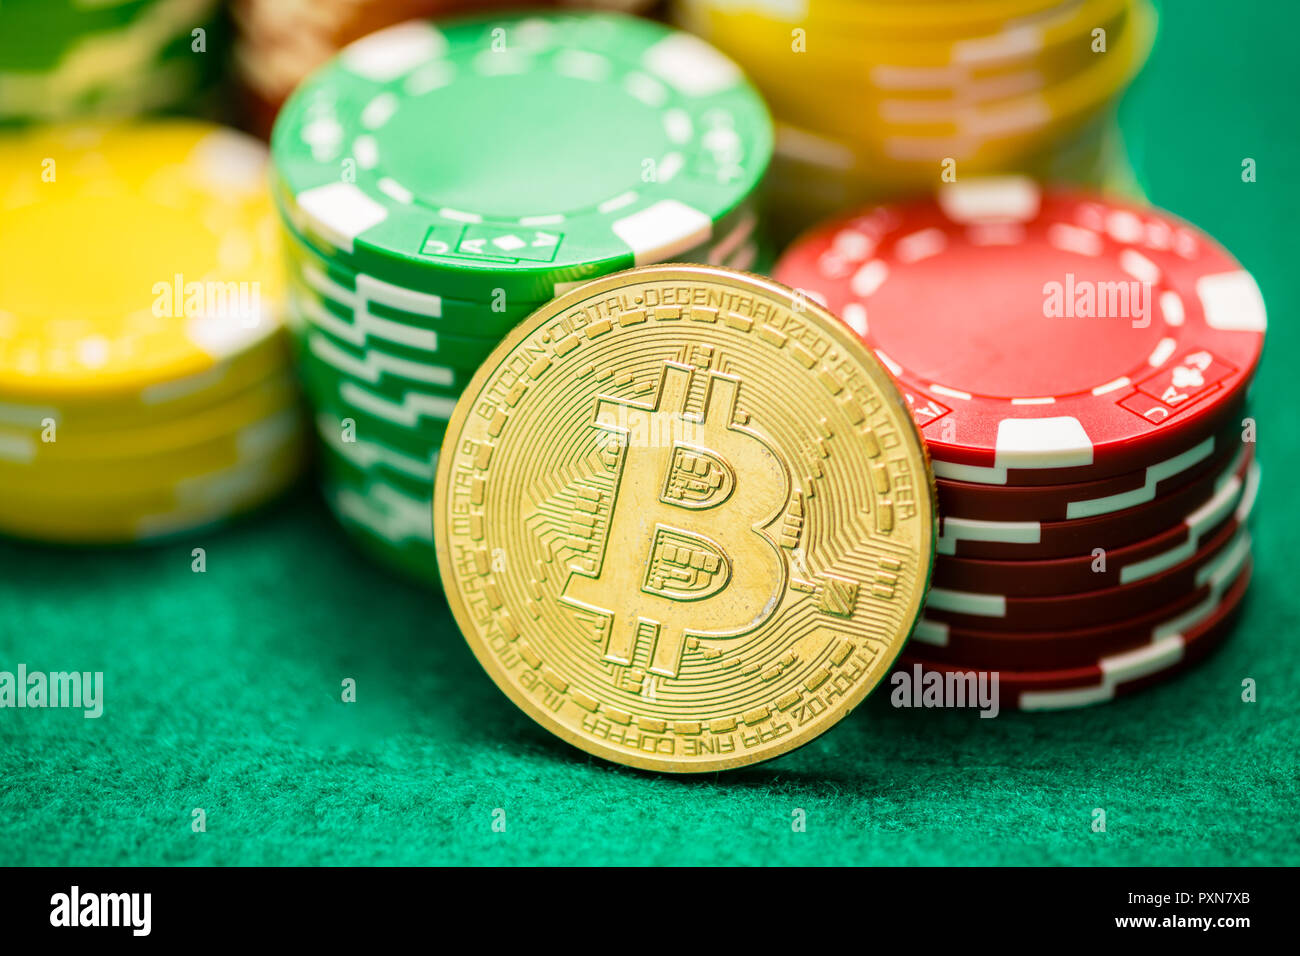 best bitcoin casino 2.0 - The Next Step